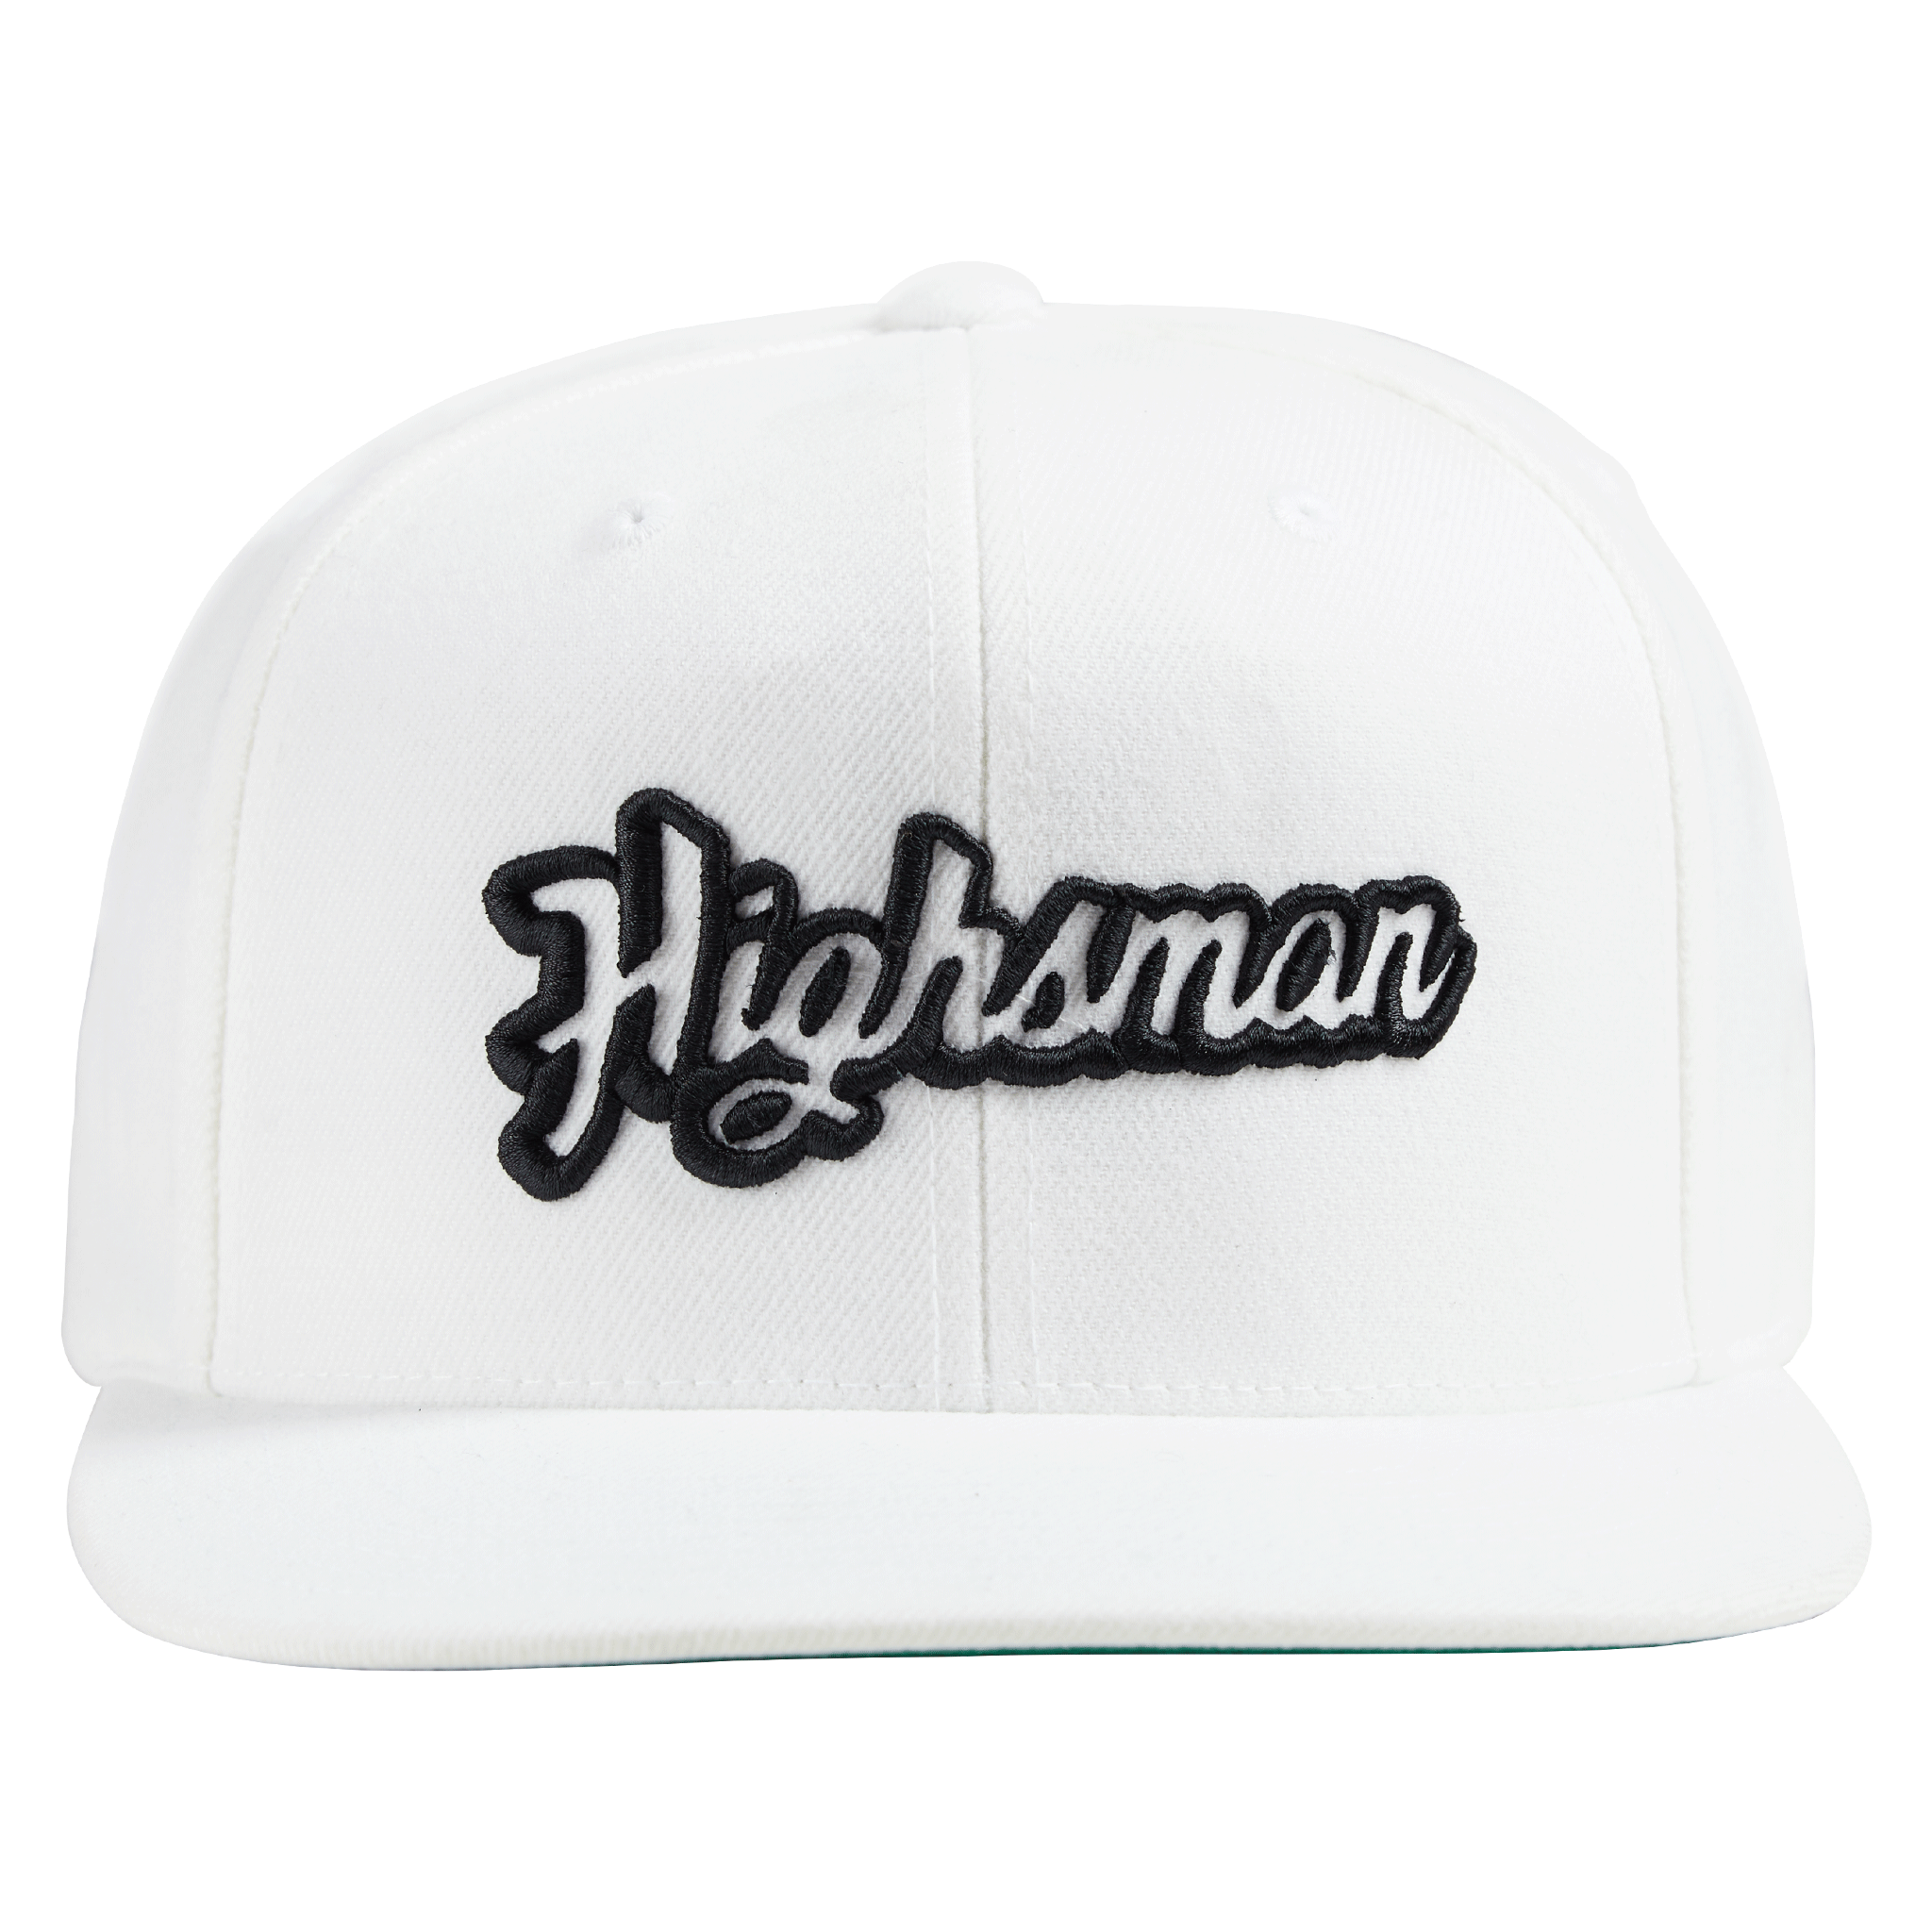 Highsman Snapback Hat